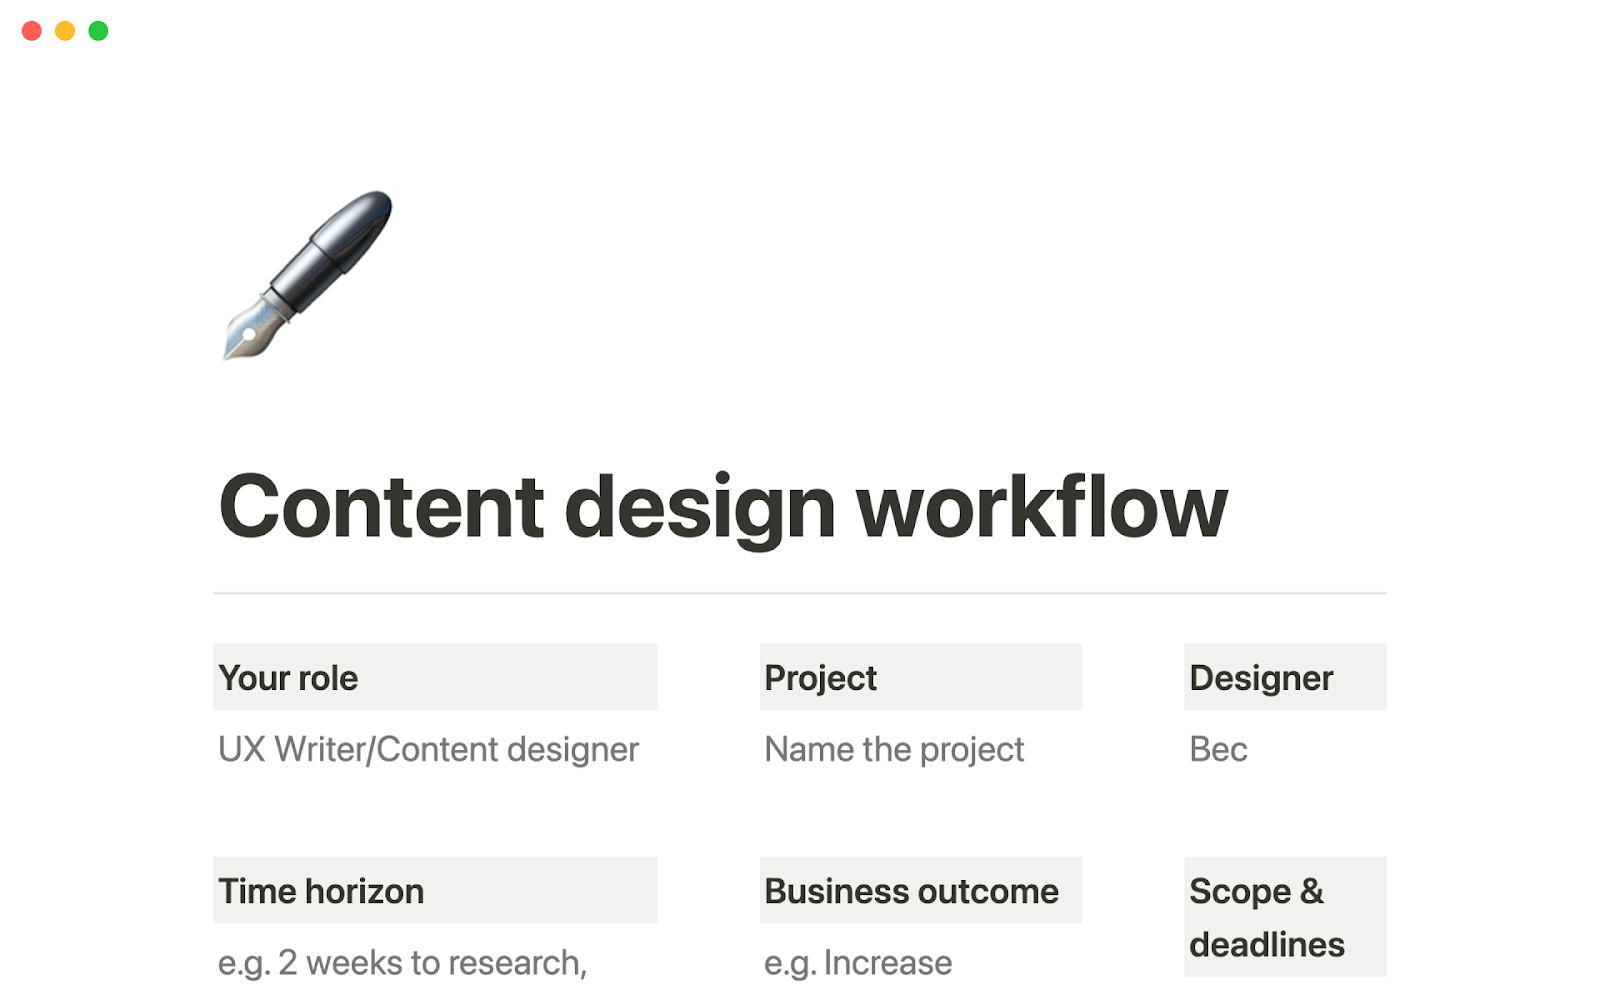 Content design workflow template